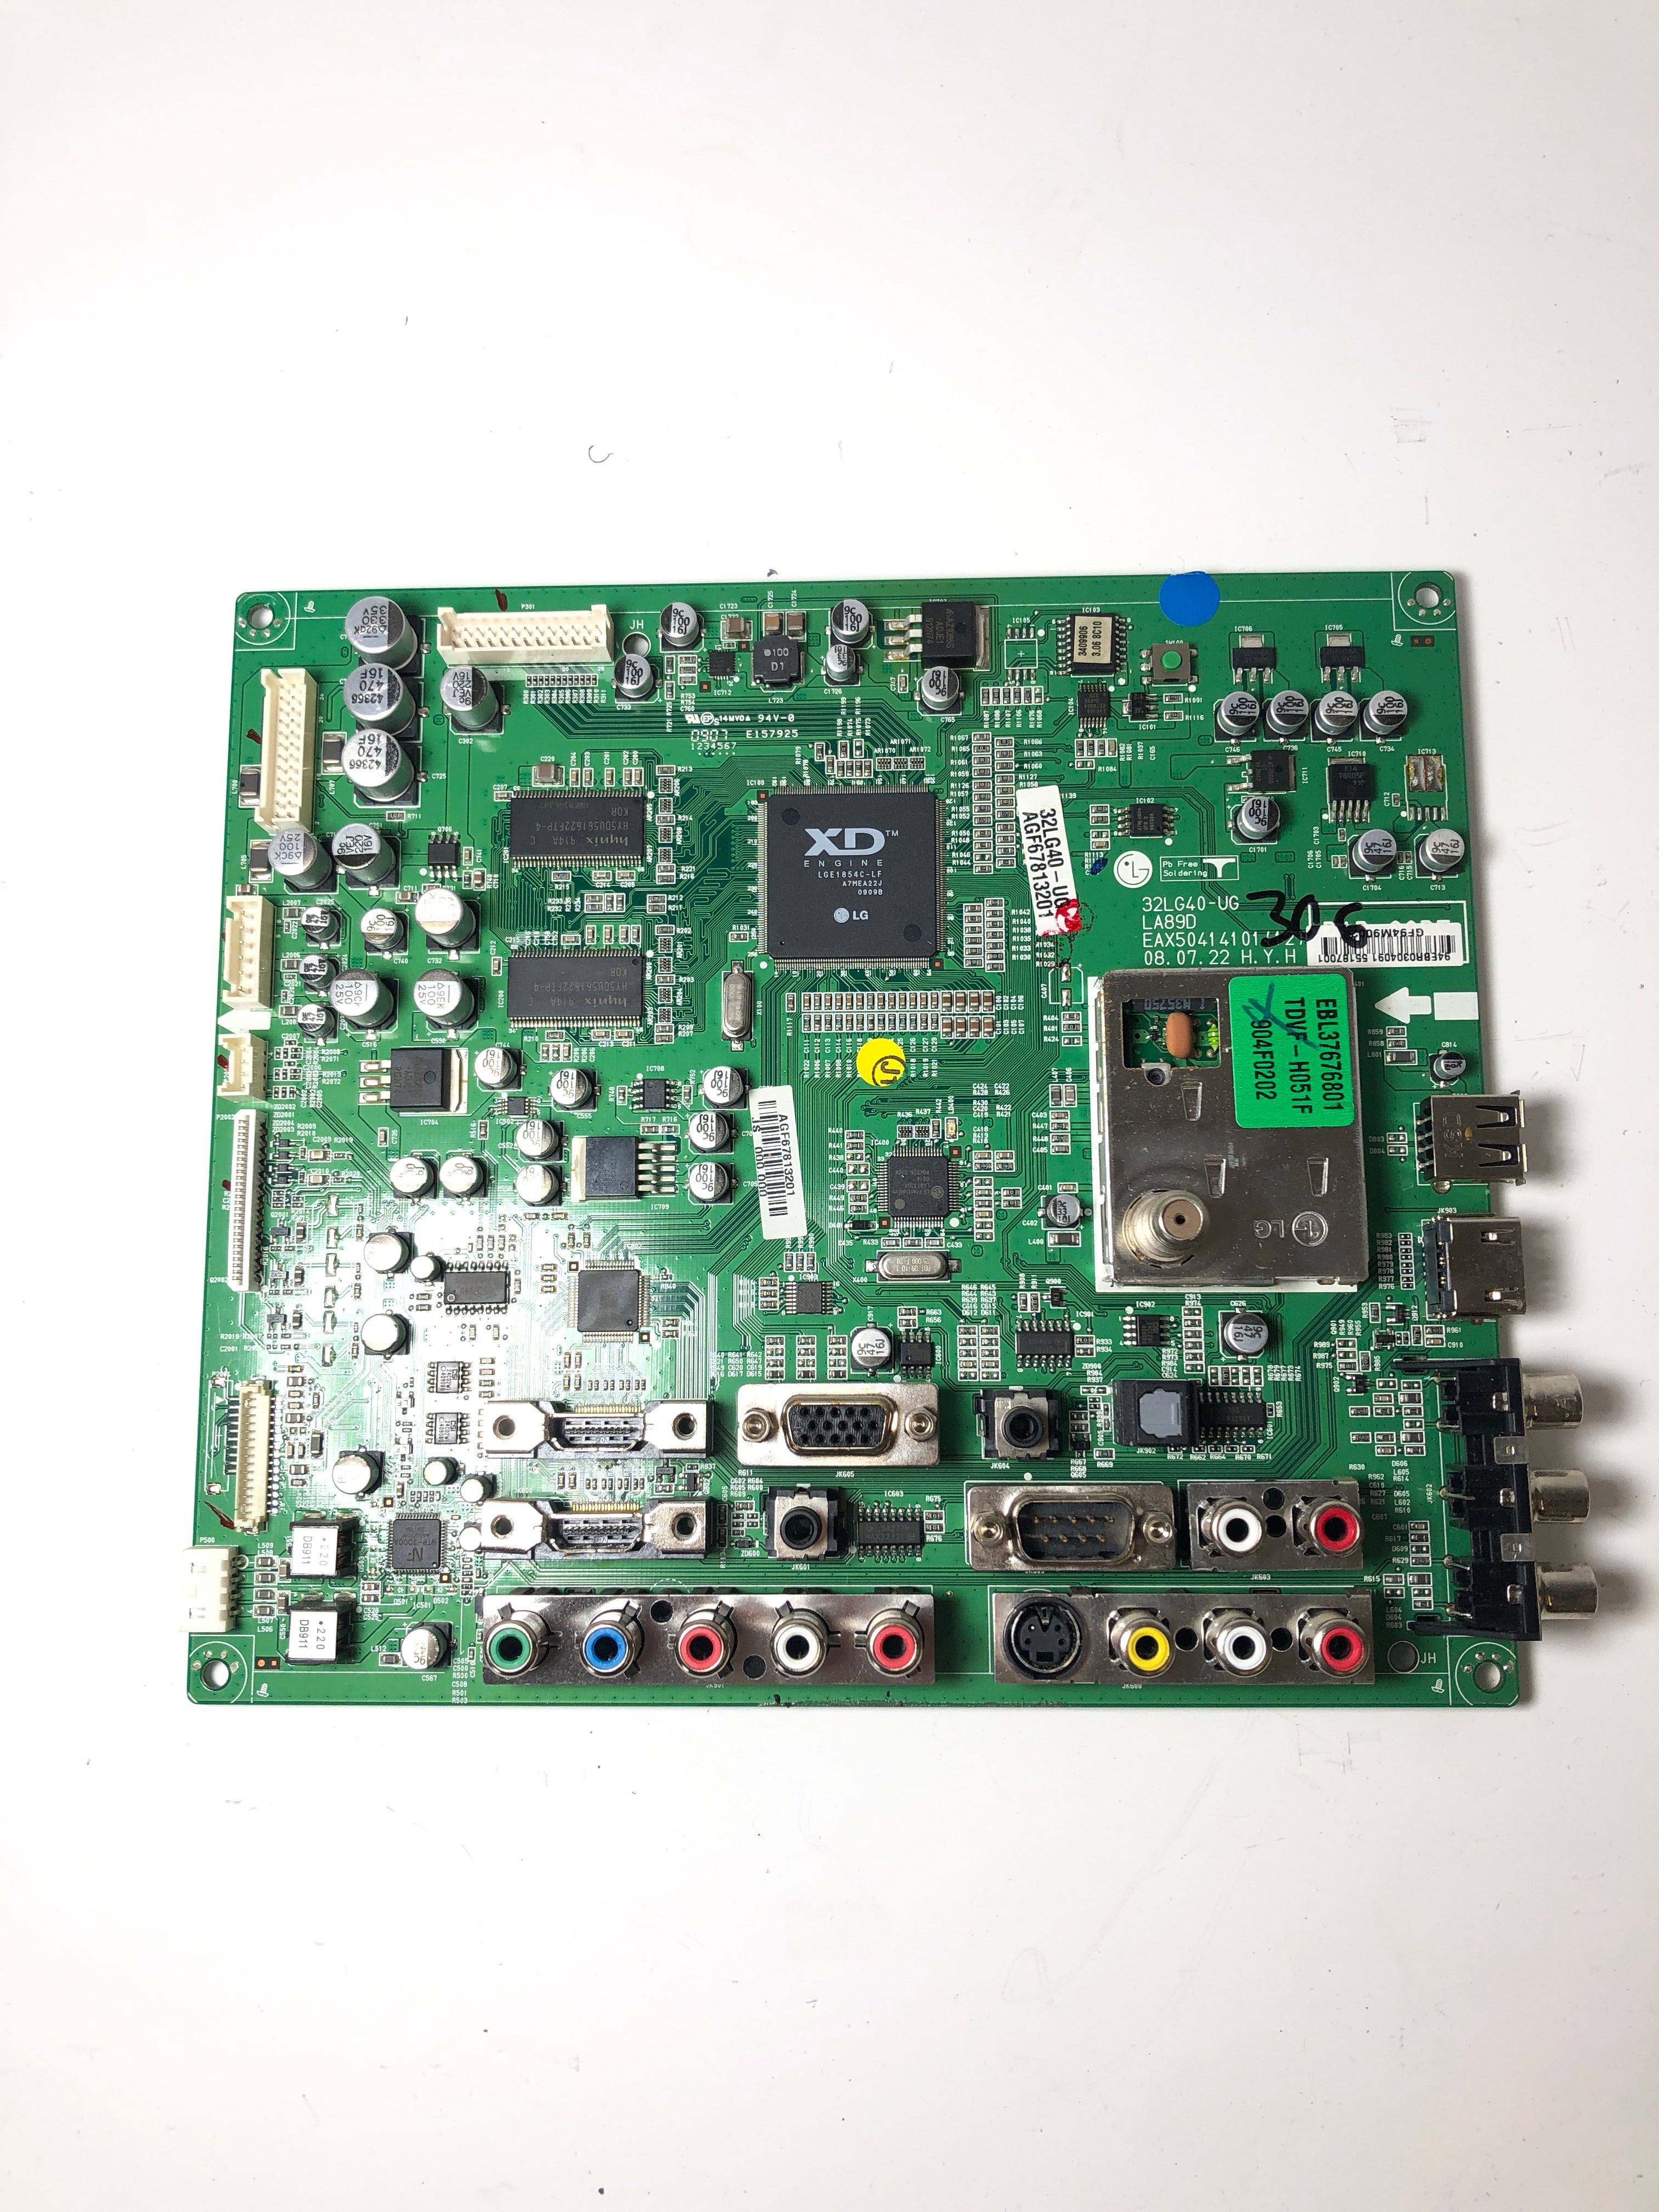 LG AGF67813201 (EAX50414101(12)) Main Board for 32LG40-UG